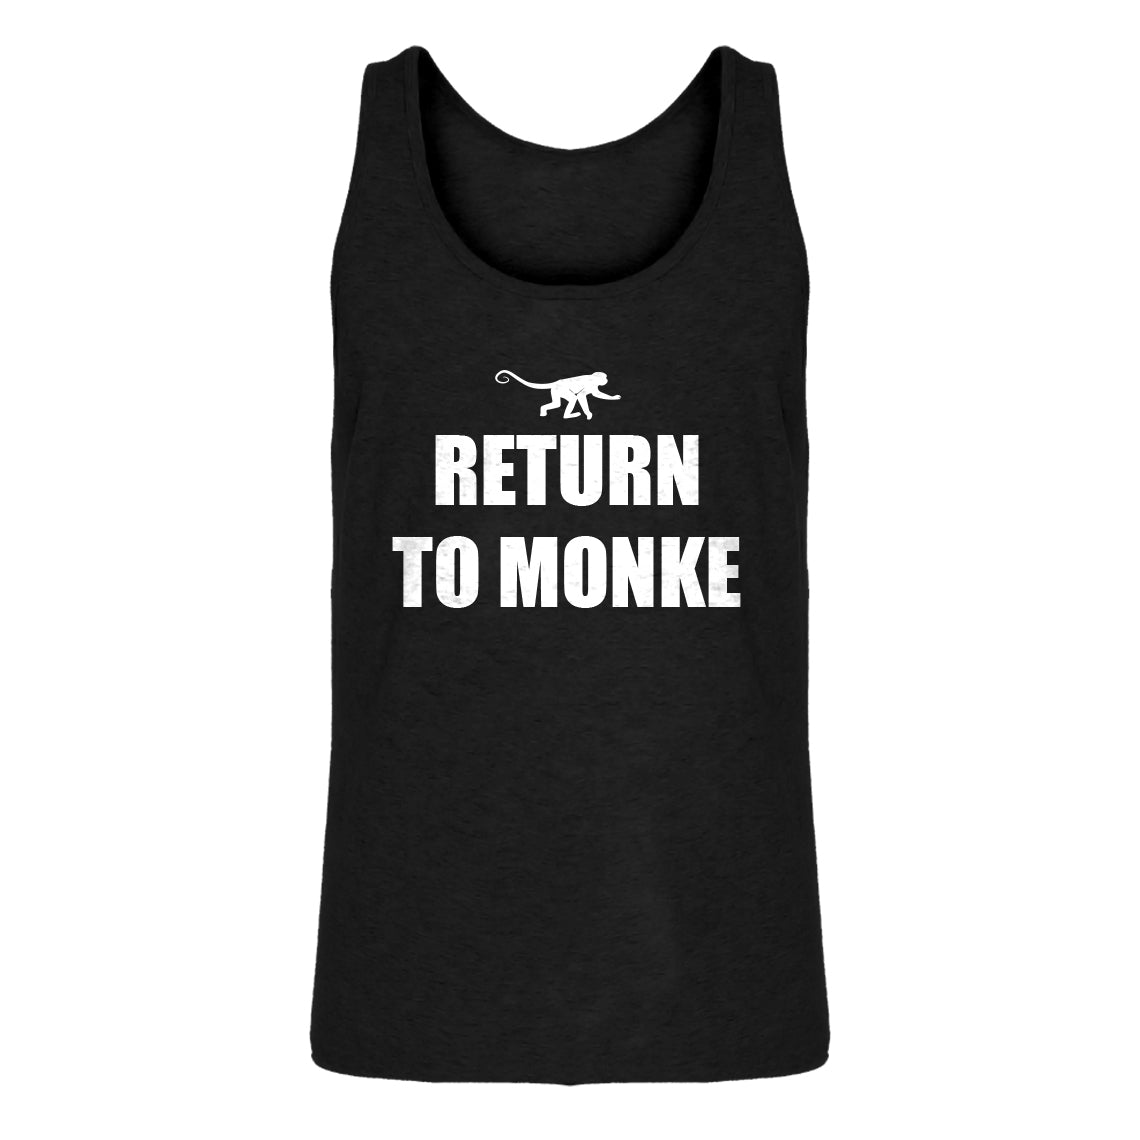 Mens Return to Monke Jersey Tank Top